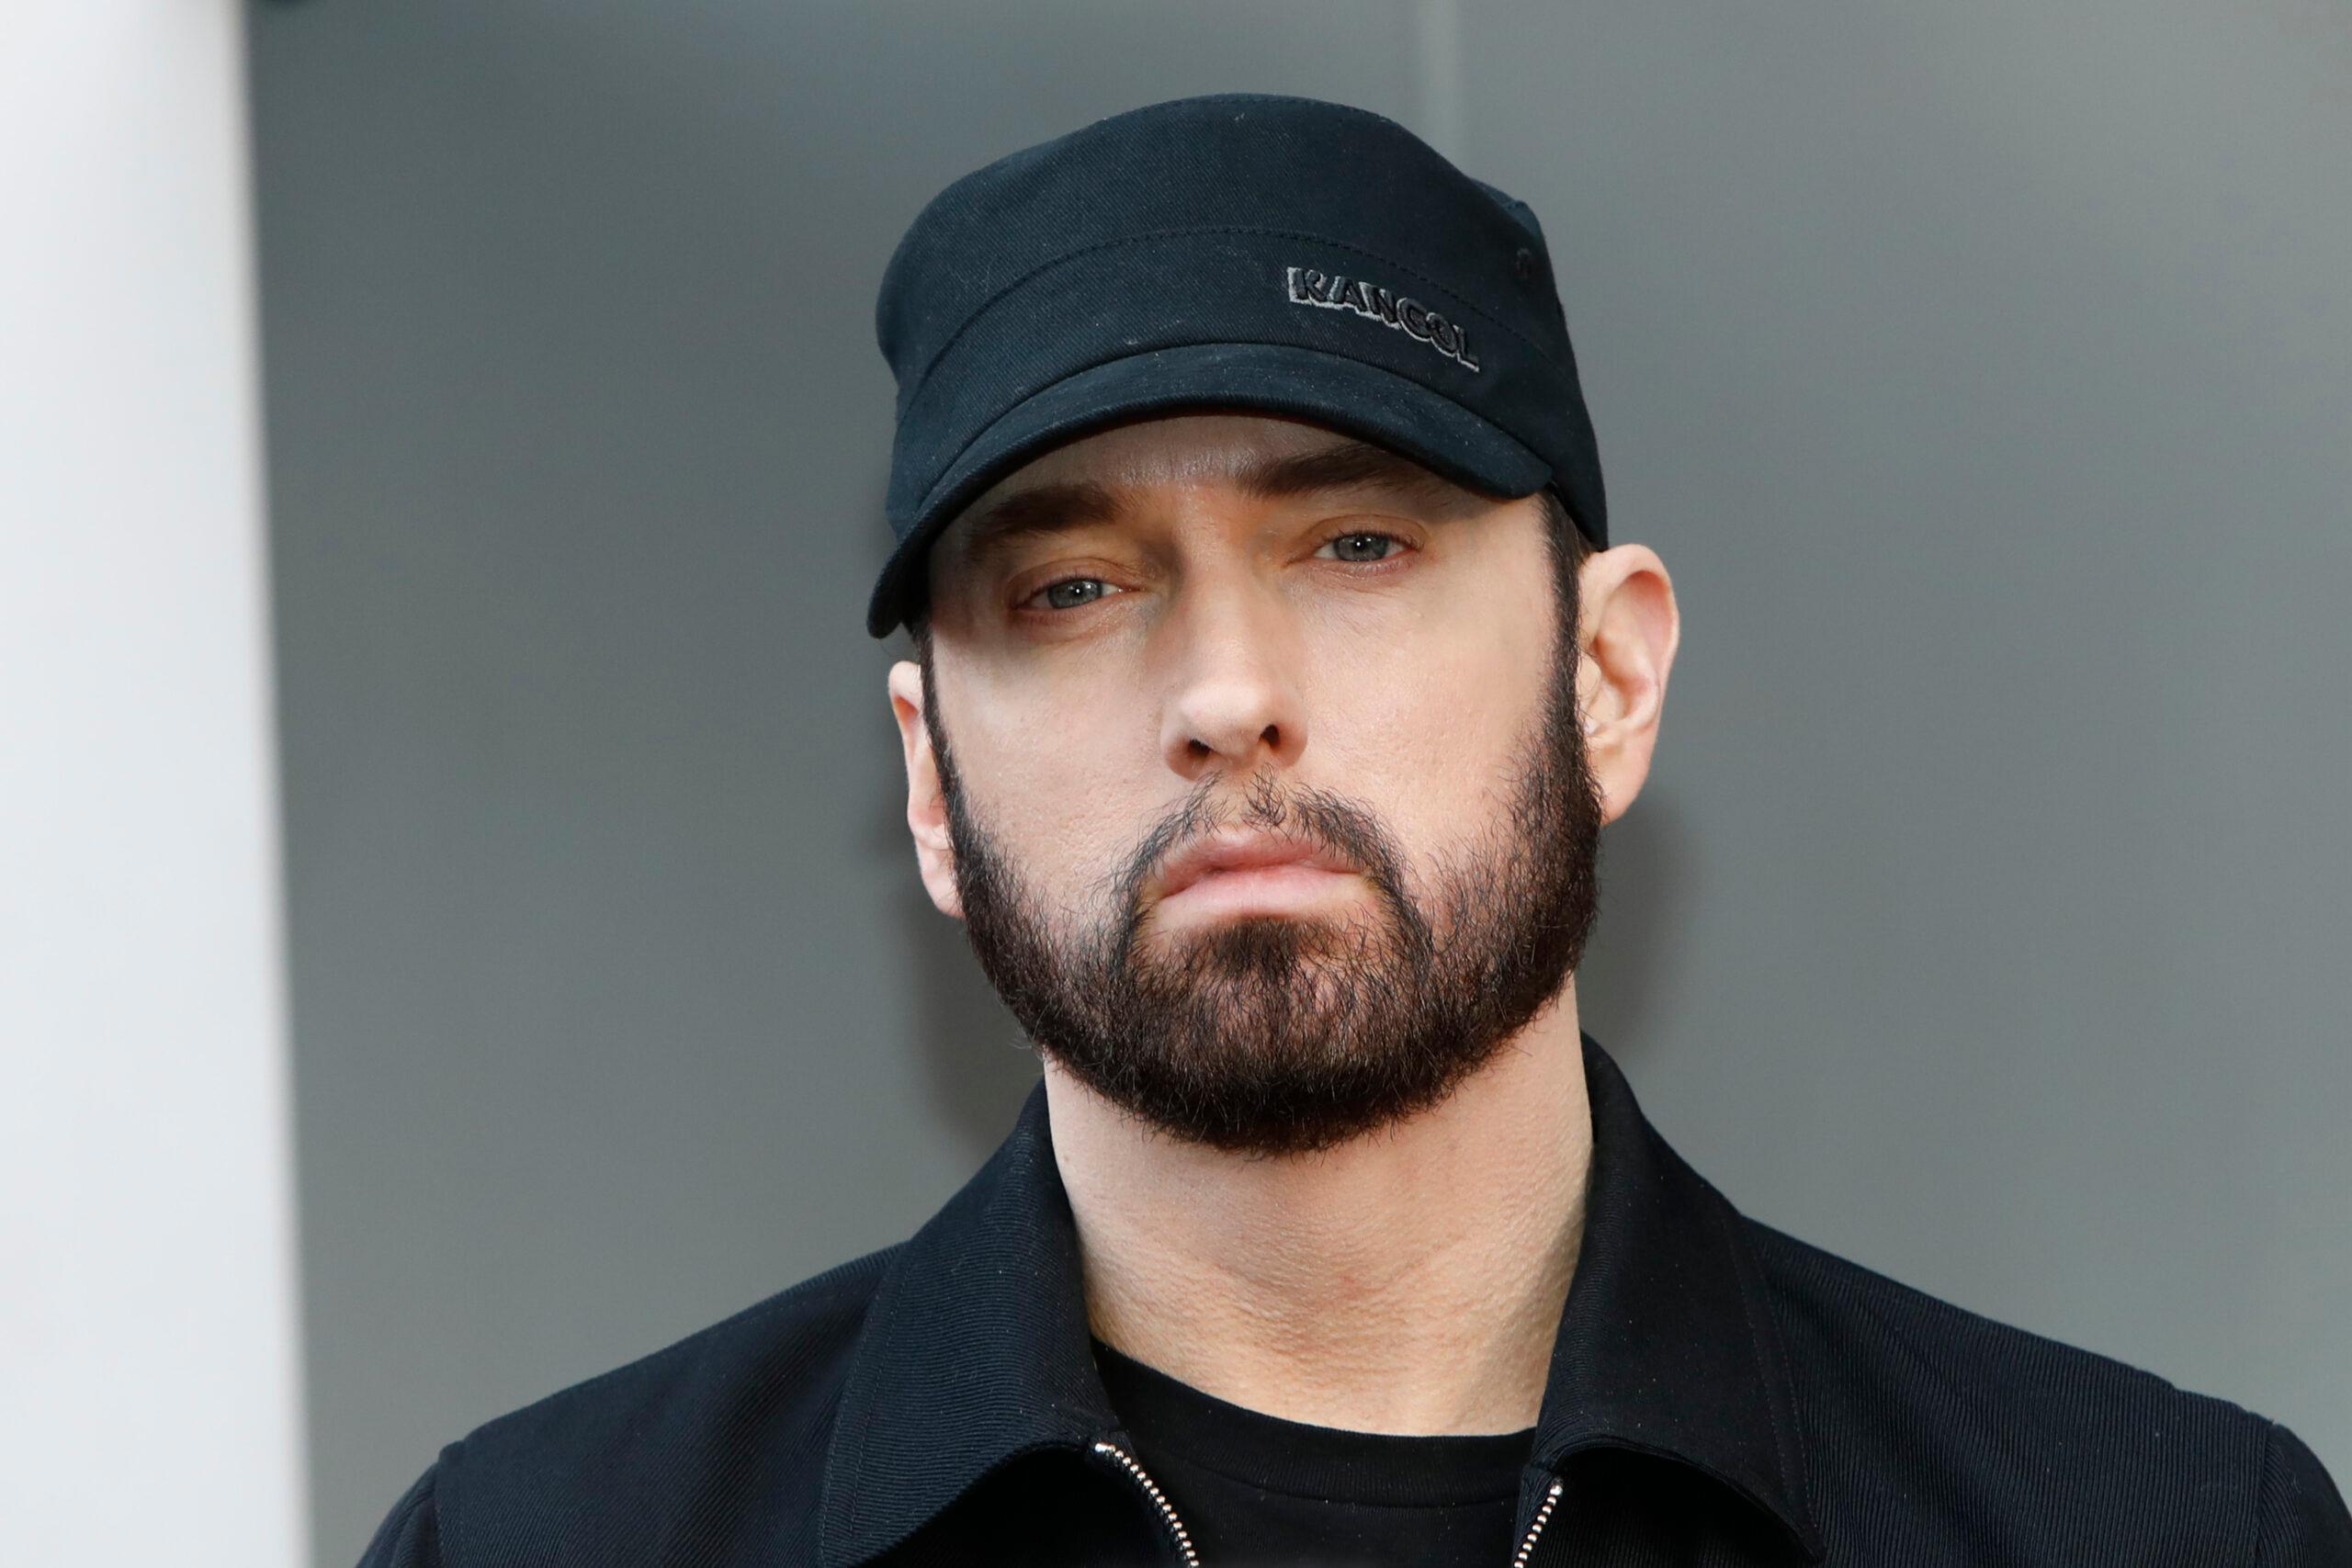 LOS ANGELES - JAN 30: Eminem, Marshall Bruce Mathers III at the 50 Cent Star Ceremony on the Hollywood Walk of Fame on January 30, 2019 in Los Angeles, CA Newscom/(Mega Agency TagID: khphotos785913.jpg) [Photo via Mega Agency]